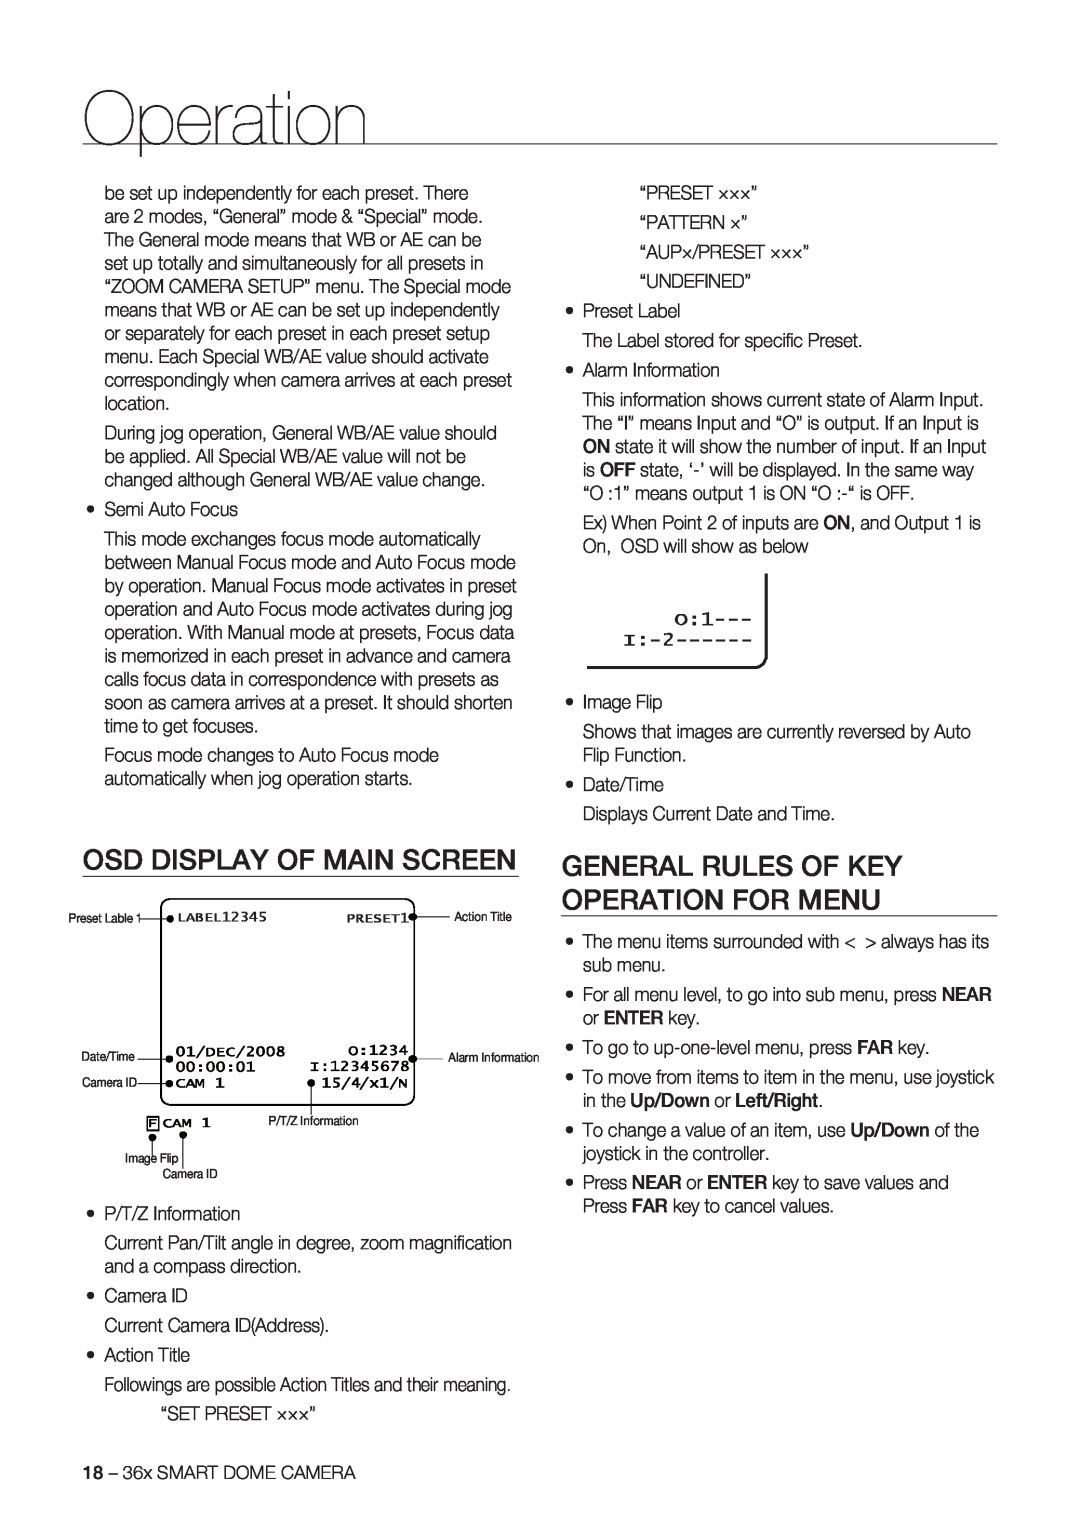 Samsung SCC-C7478P manual Osd Display Of Main Screen, General Rules Of Key Operation For Menu 